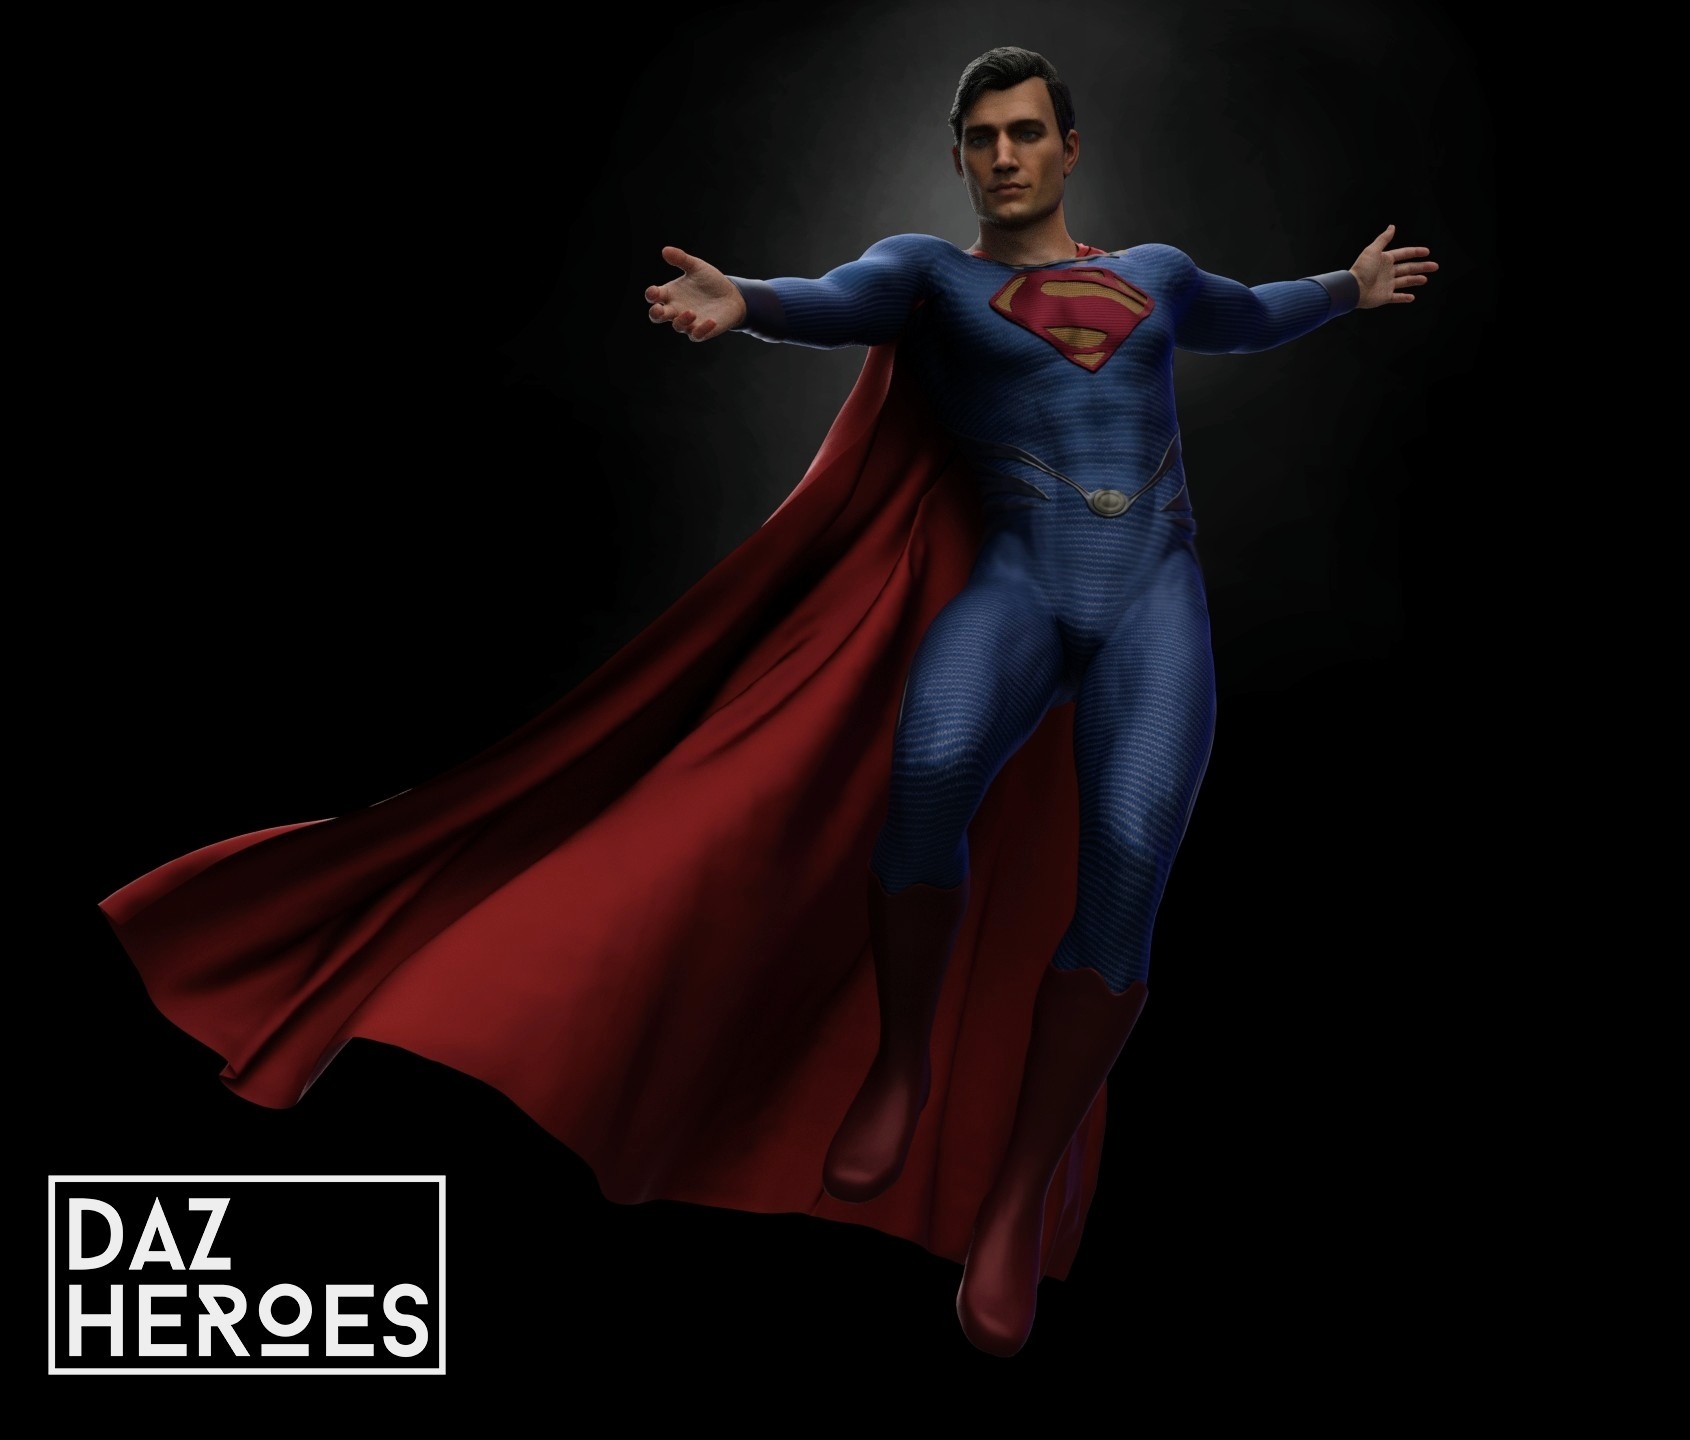 Superman DCEU for Daz 3D Genesis 8 download by DazHeroes on DeviantArt